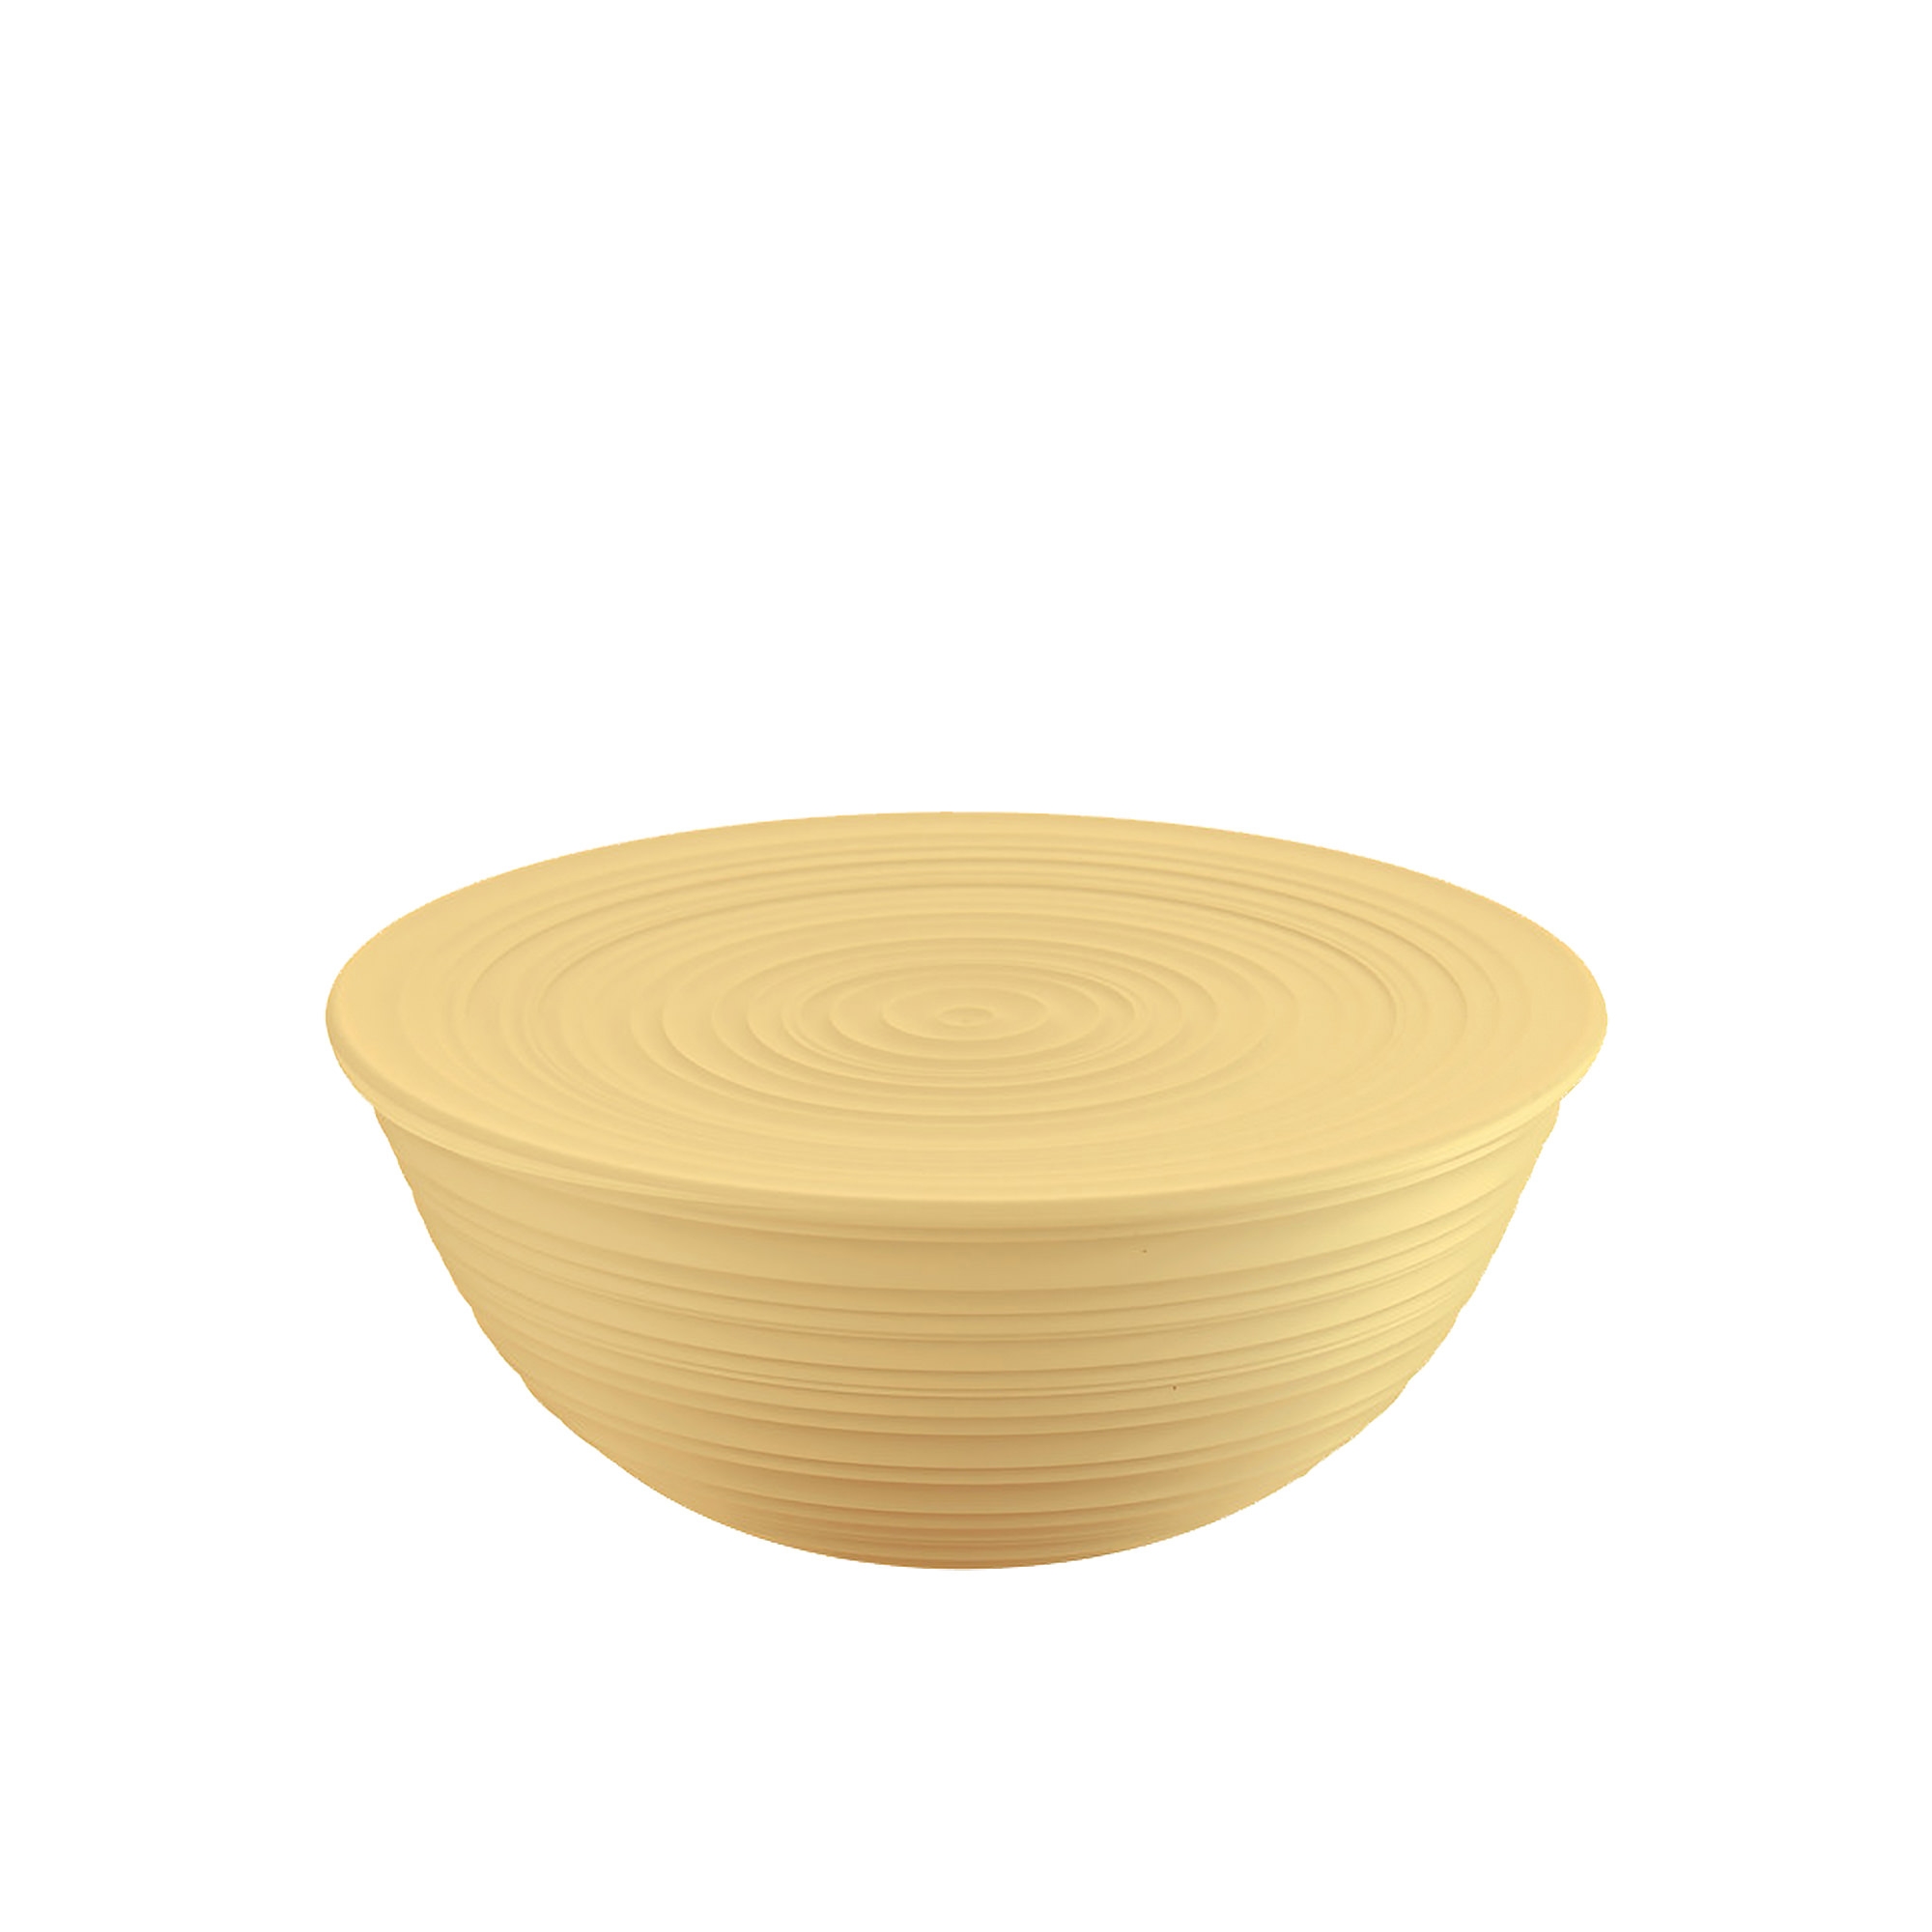 Guzzini Earth Tierra Bowl with Lid Medium Mustard Yellow Image 1